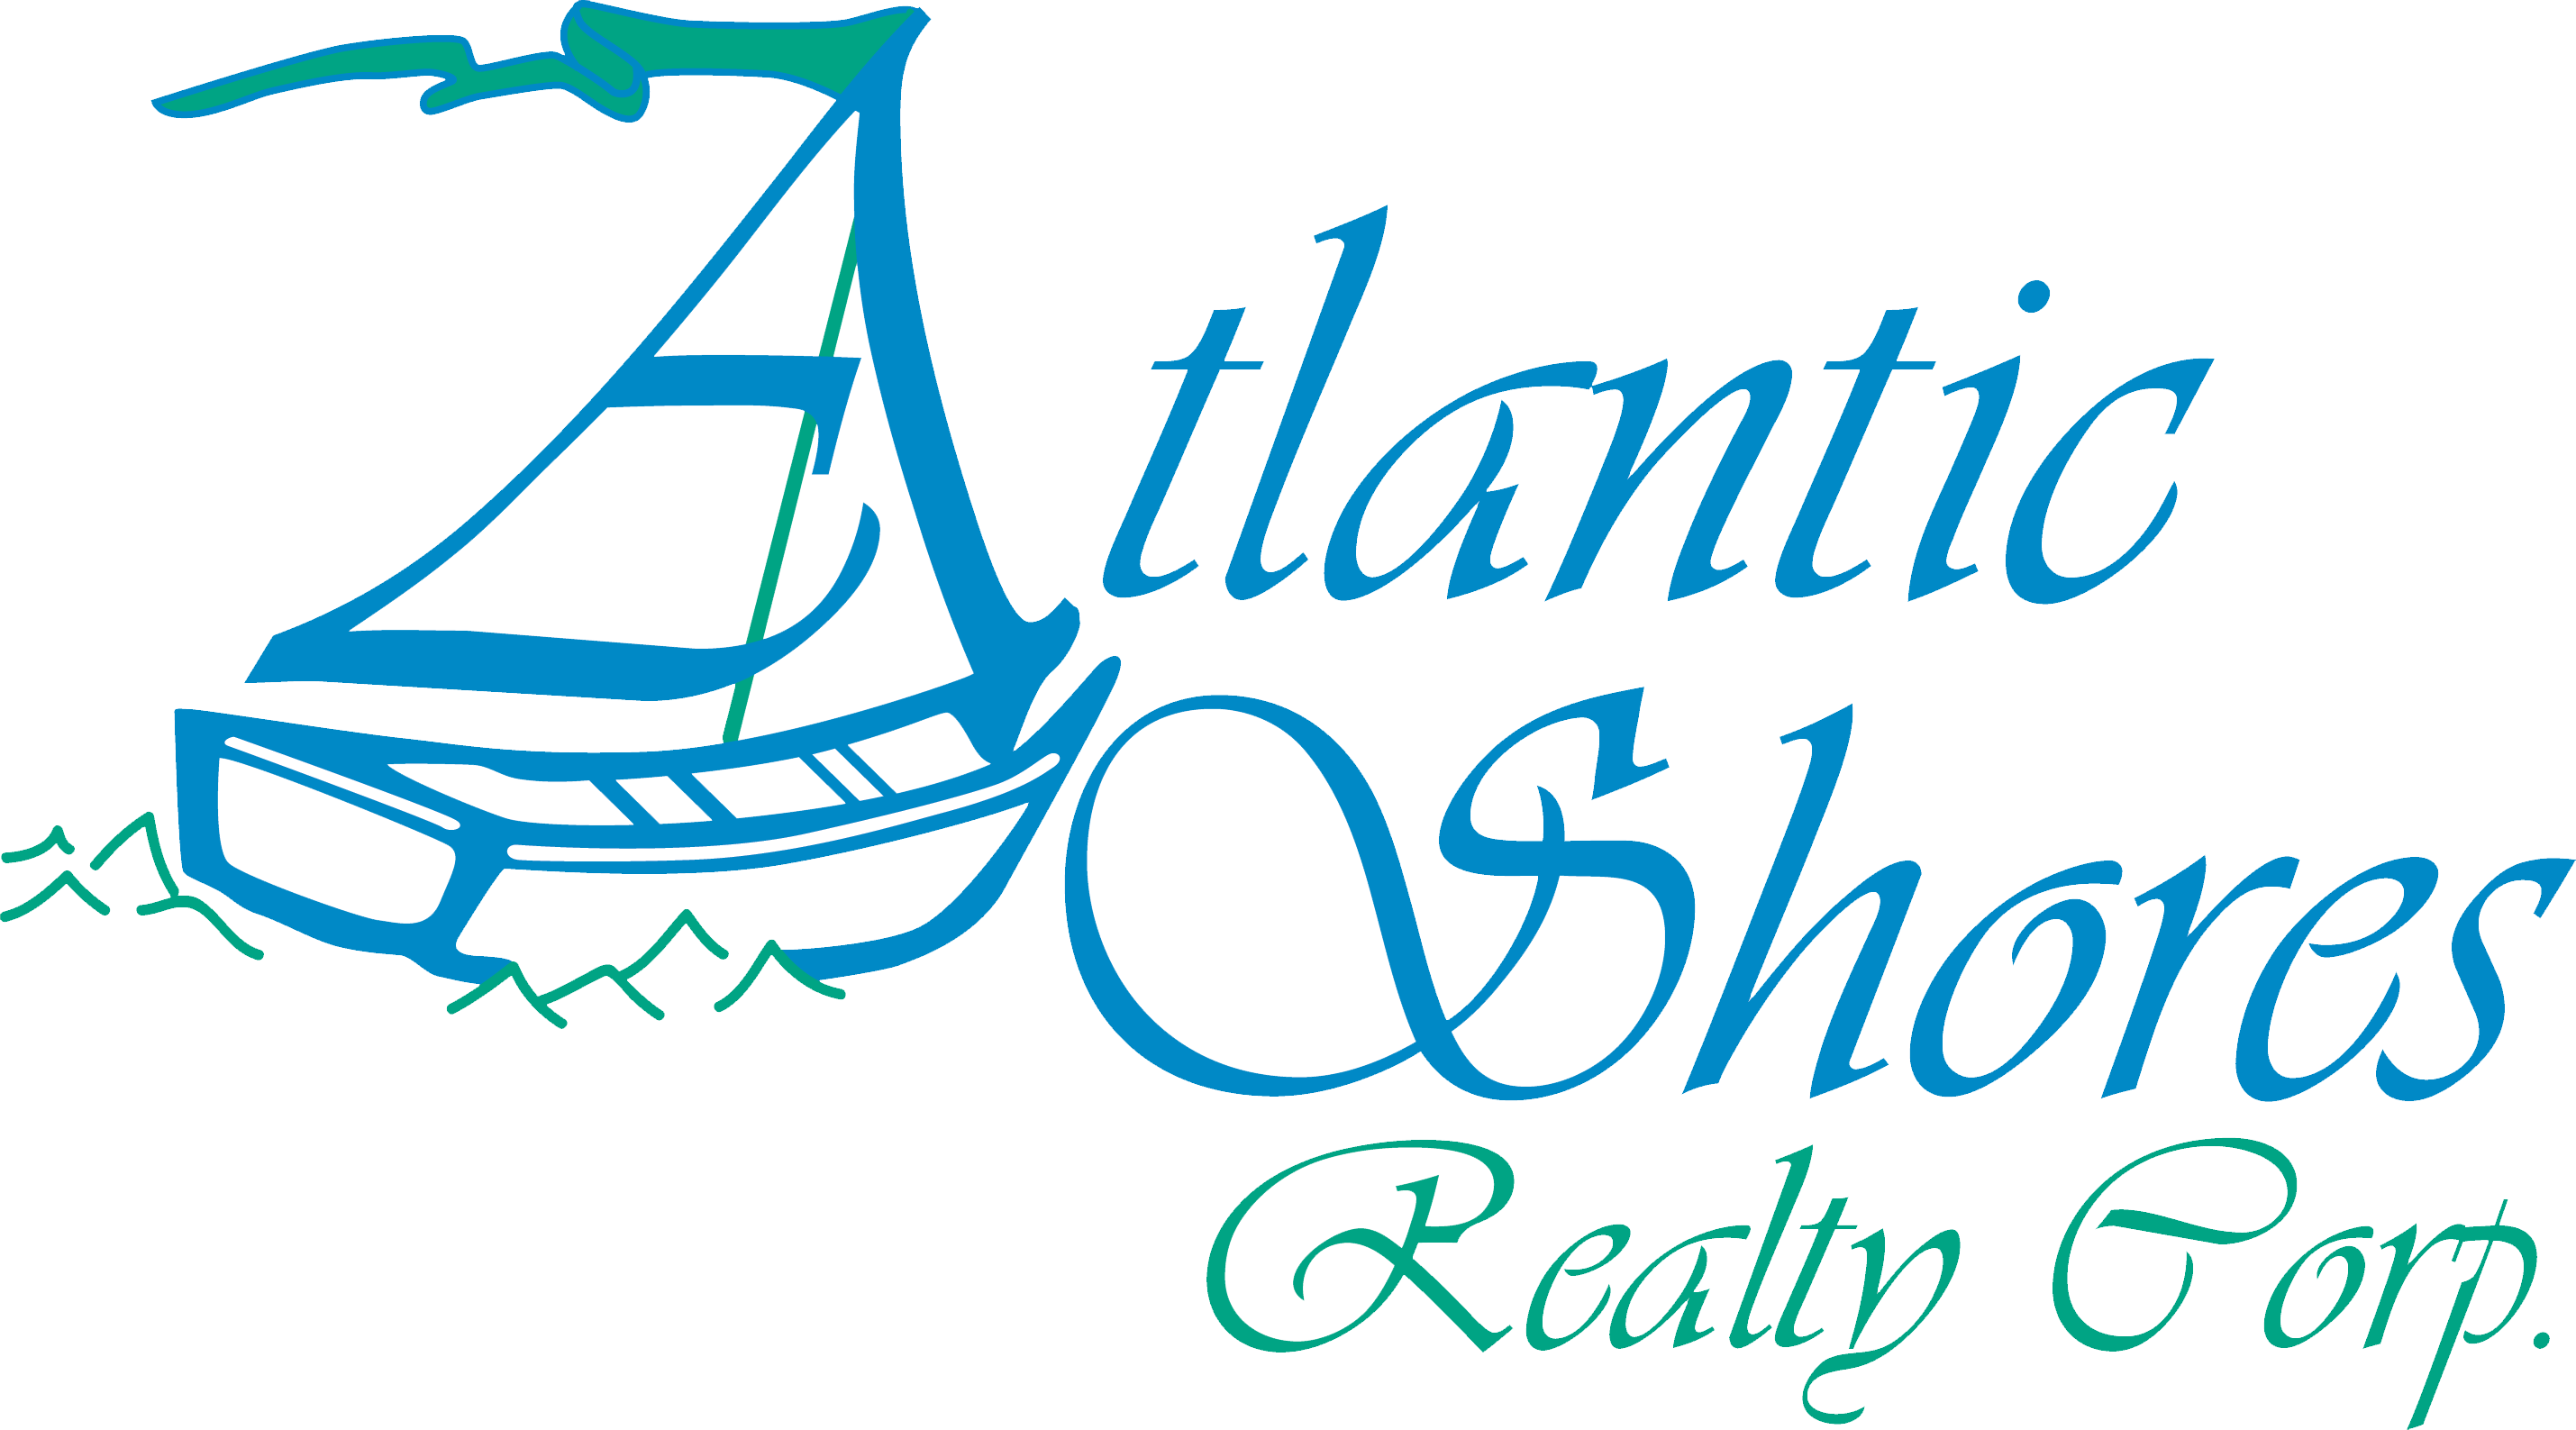 Atlantic Shores Realty Corp's realty website